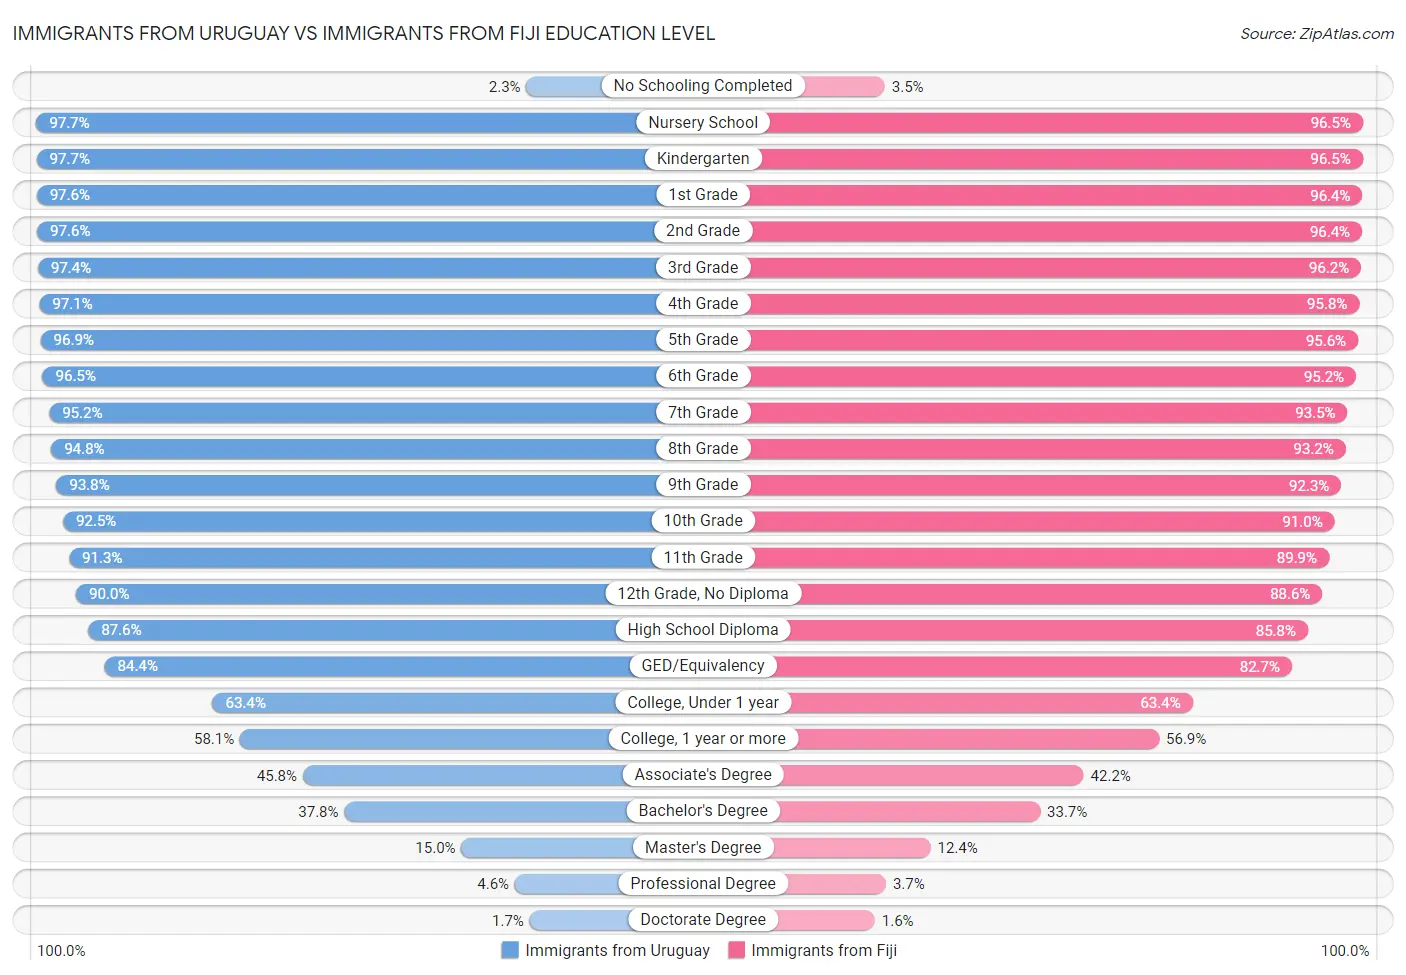 Immigrants from Uruguay vs Immigrants from Fiji Education Level